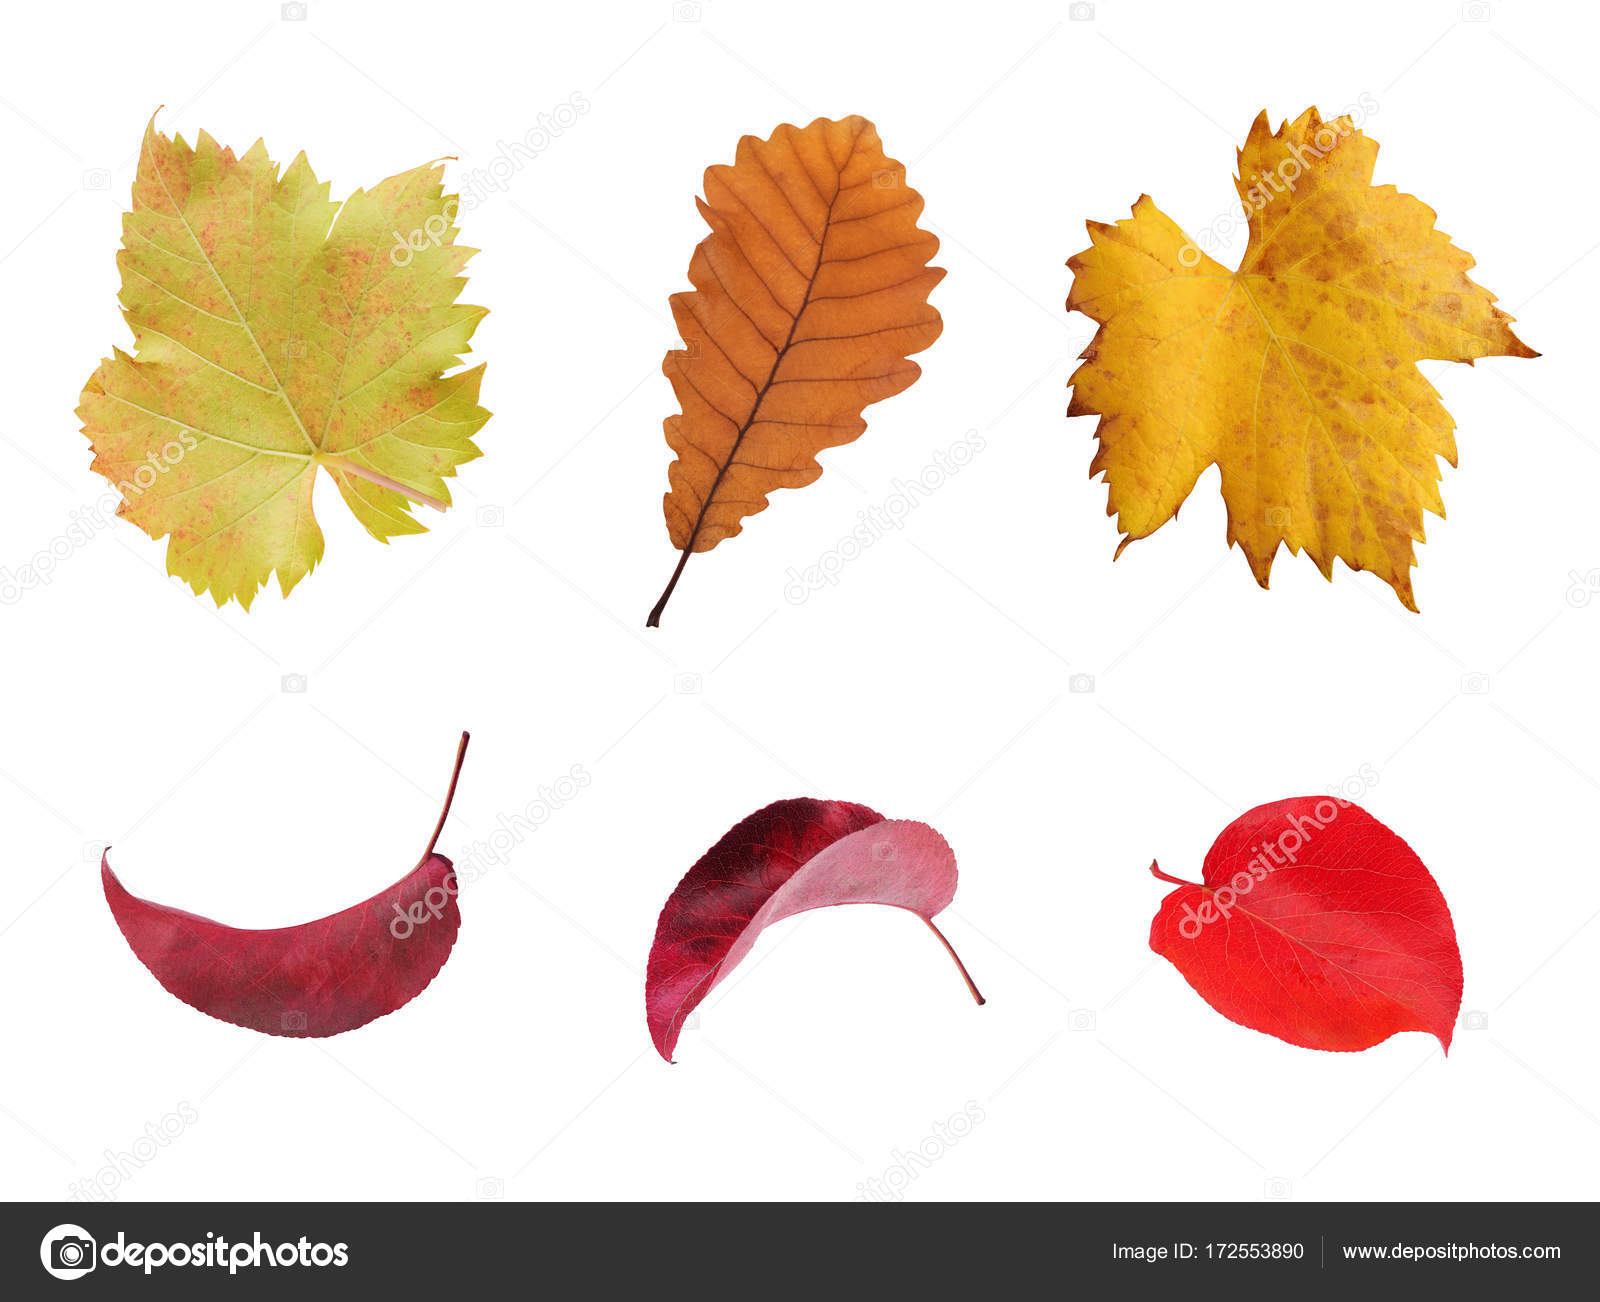 multicolored autumn leaves — Stock Photo © levkro #172553890